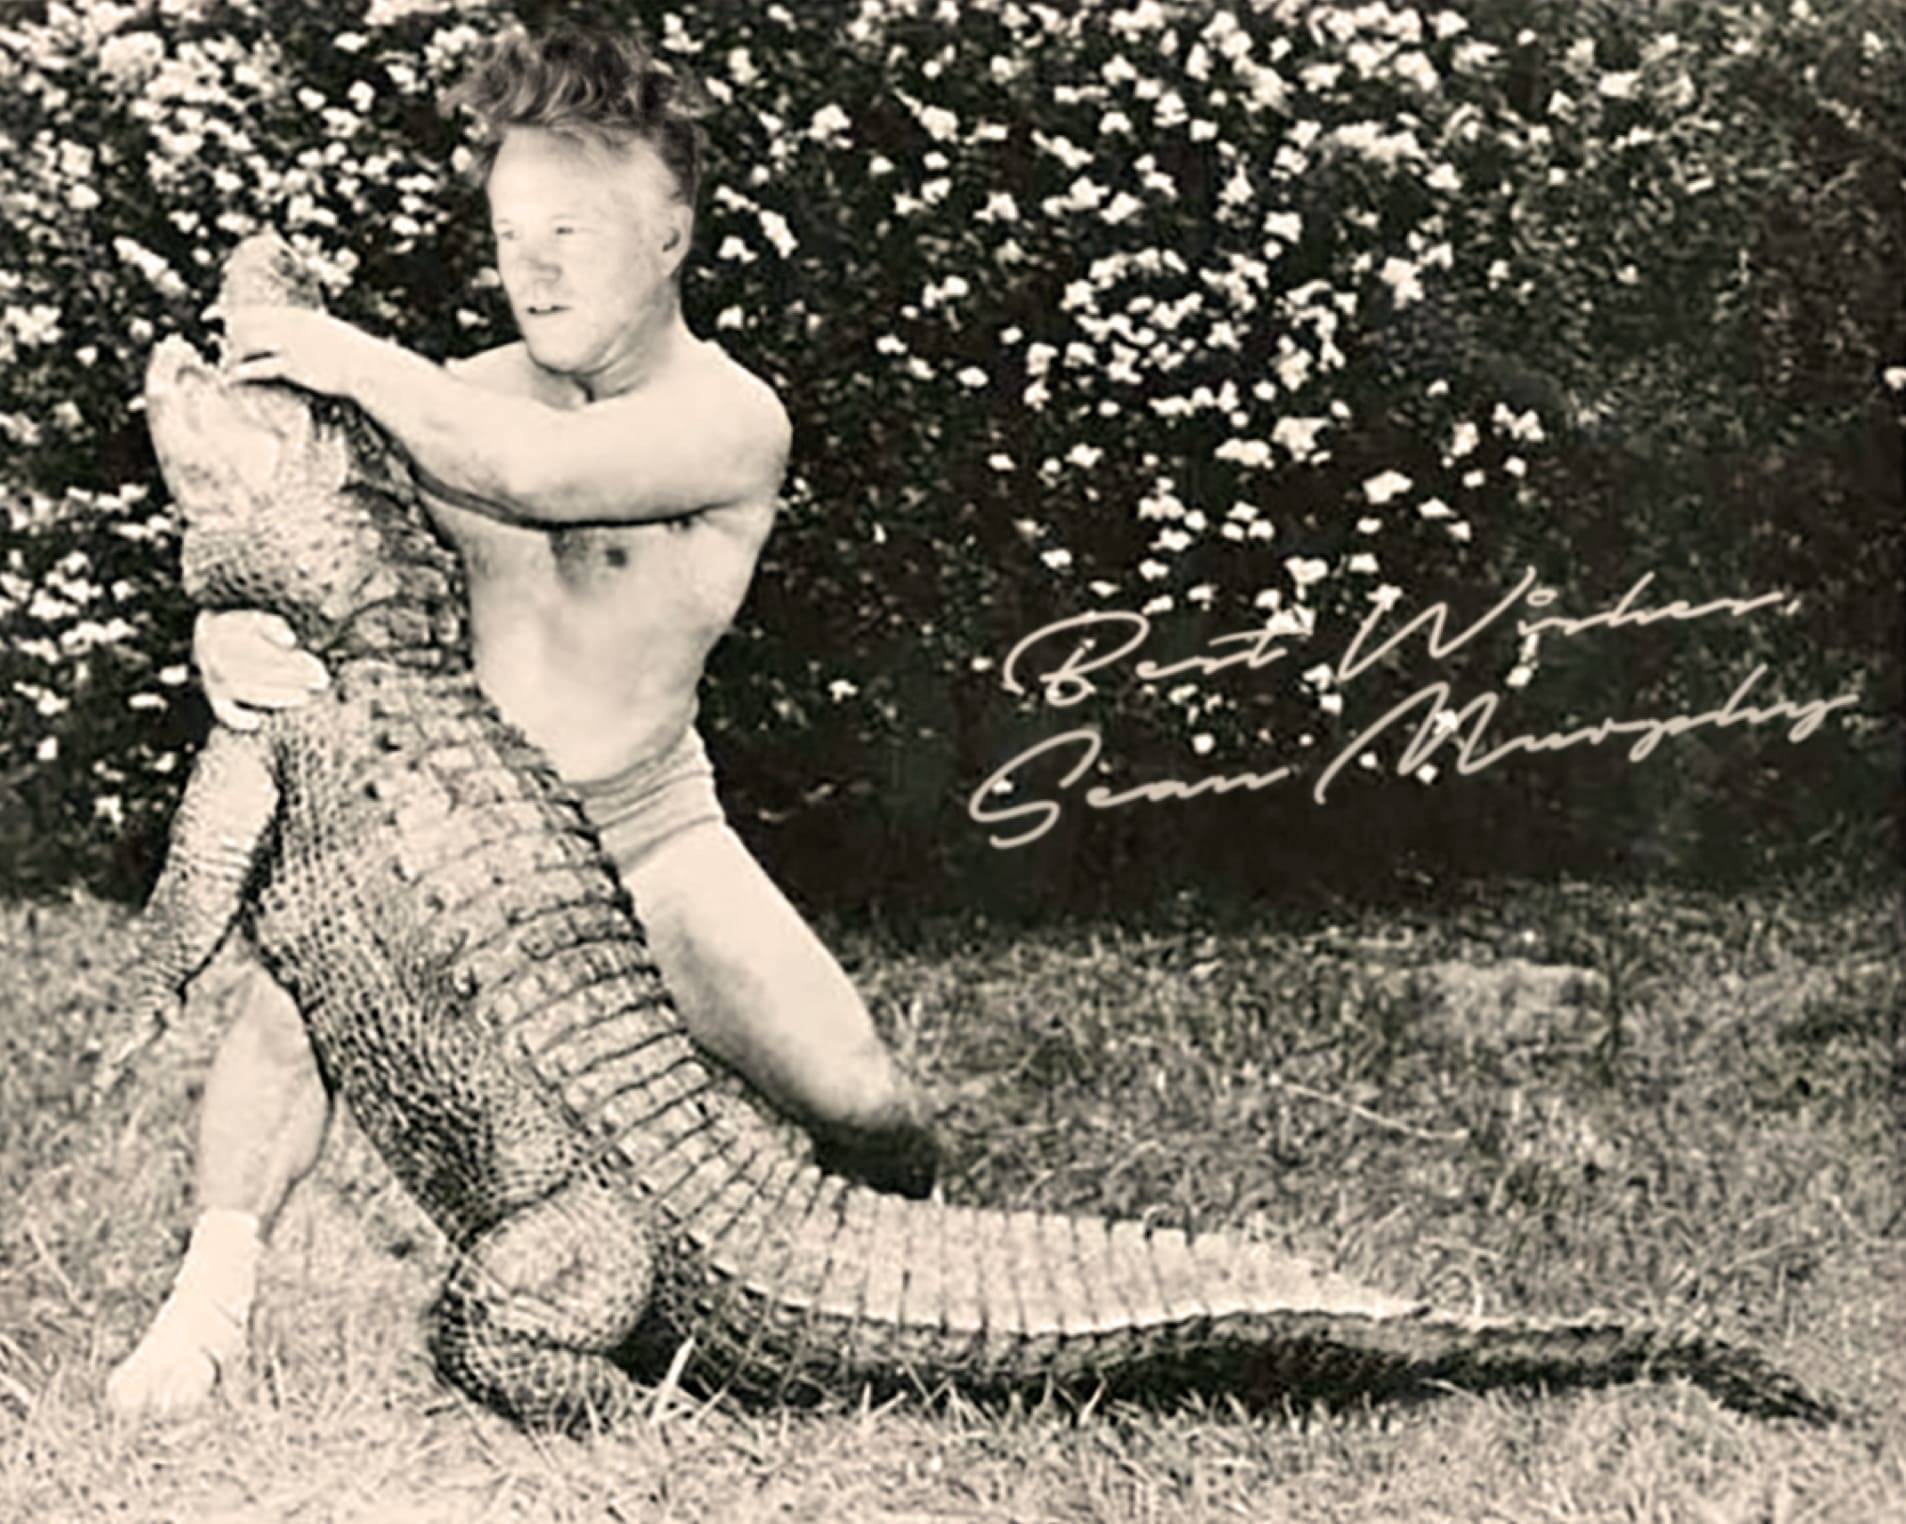 Murph wrestling a gator